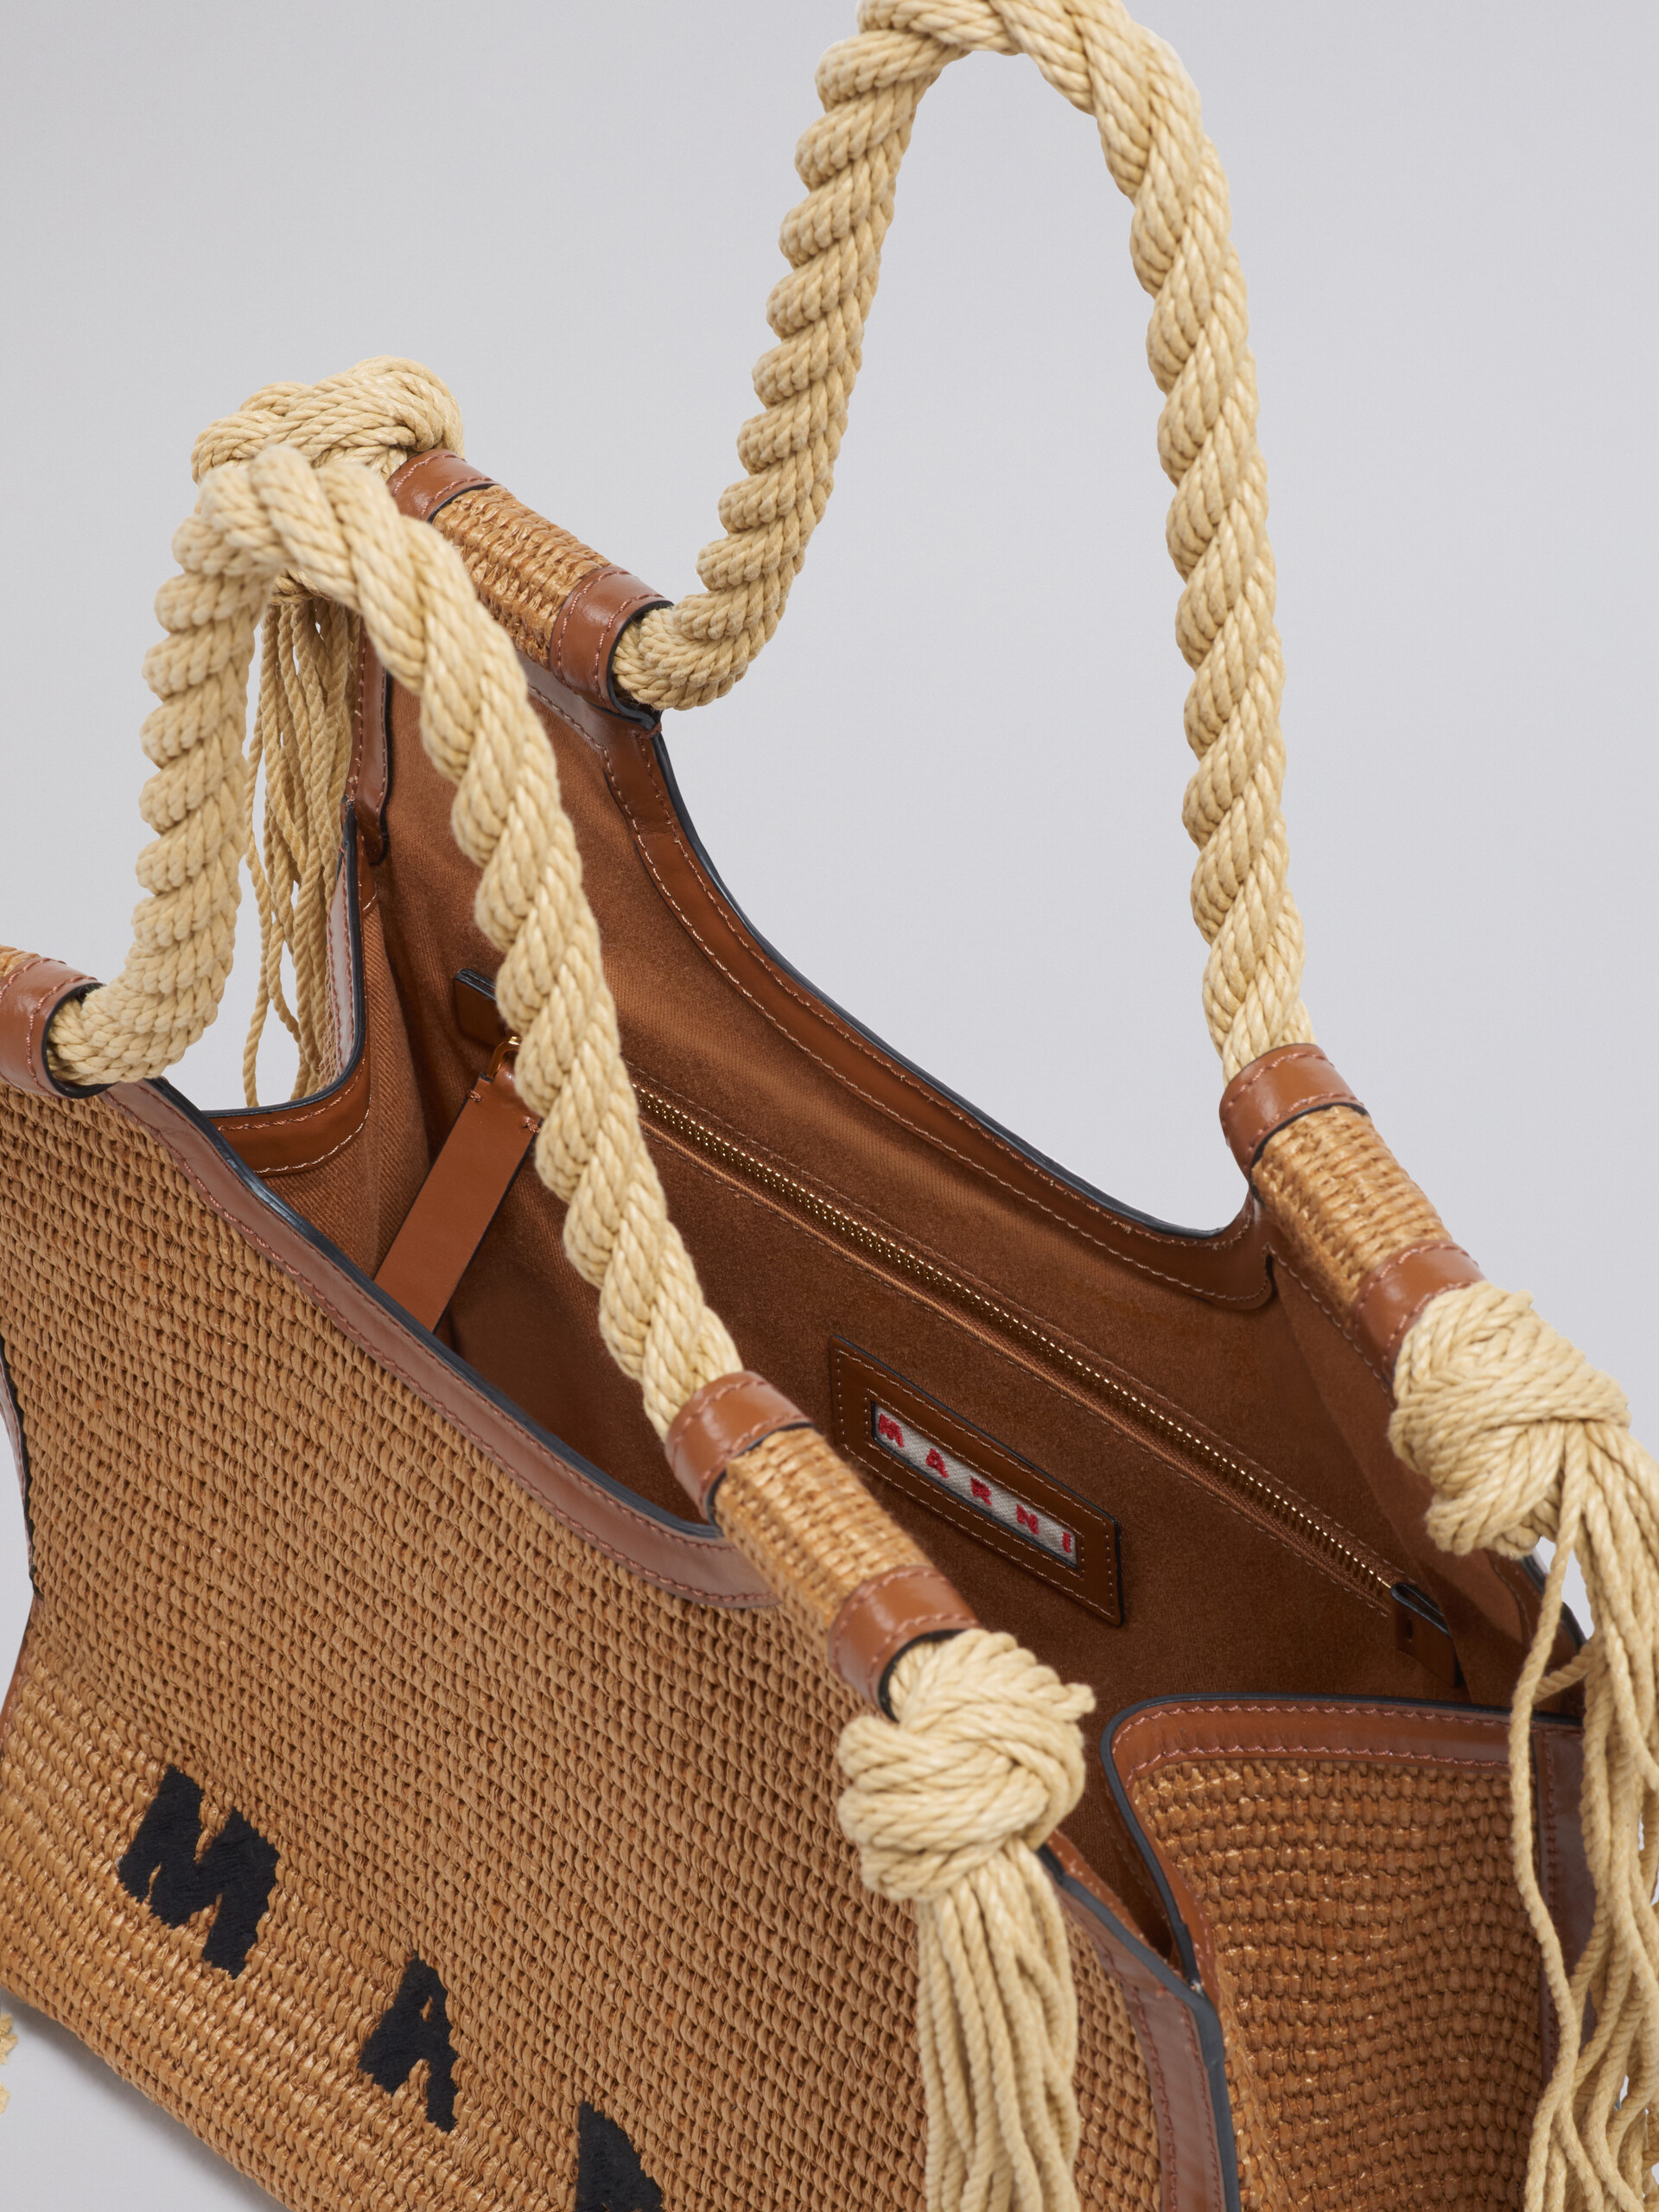 Marcel Summer Bag with rope handles - Handbag - Image 4